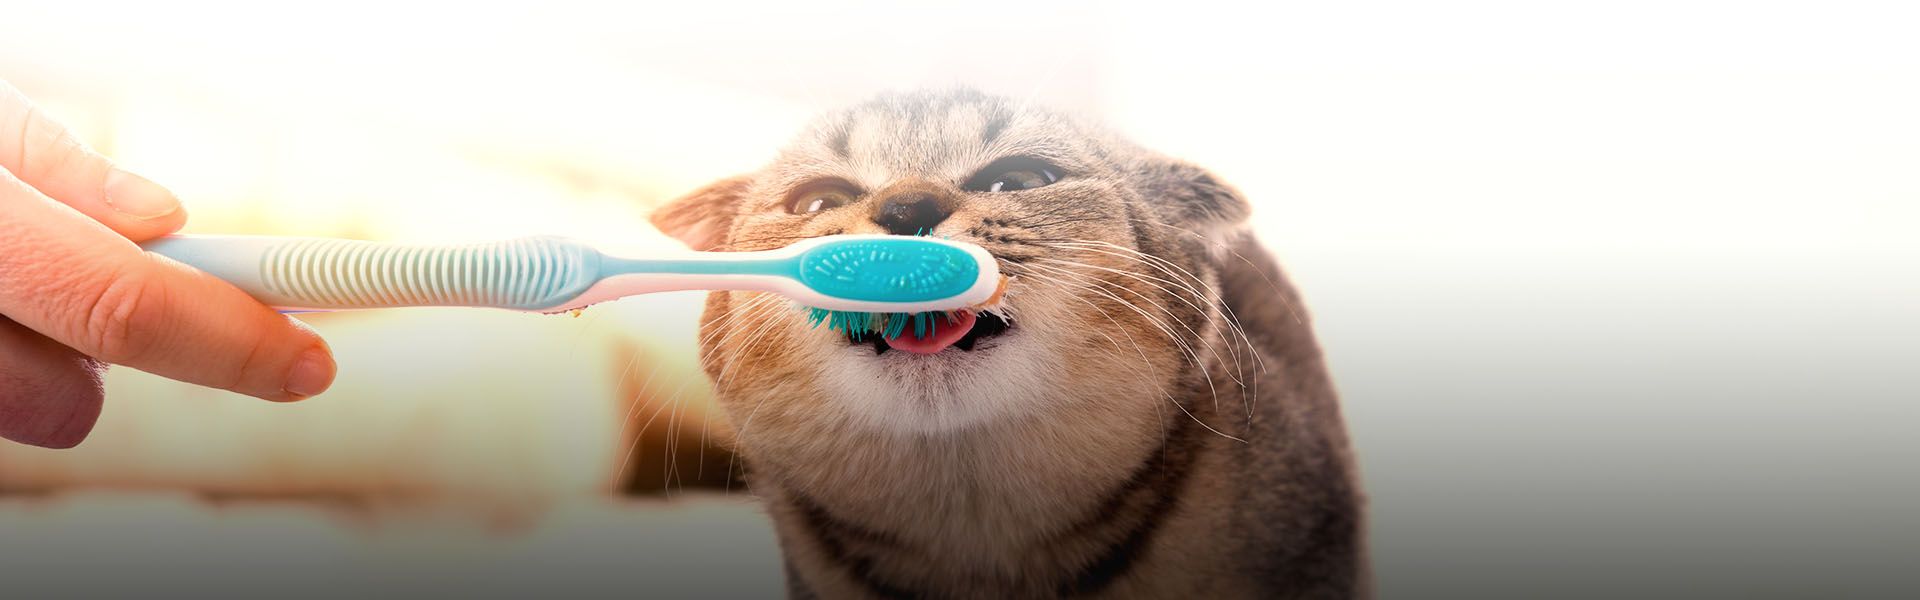 british kitten brushing his teeth with toothbrush